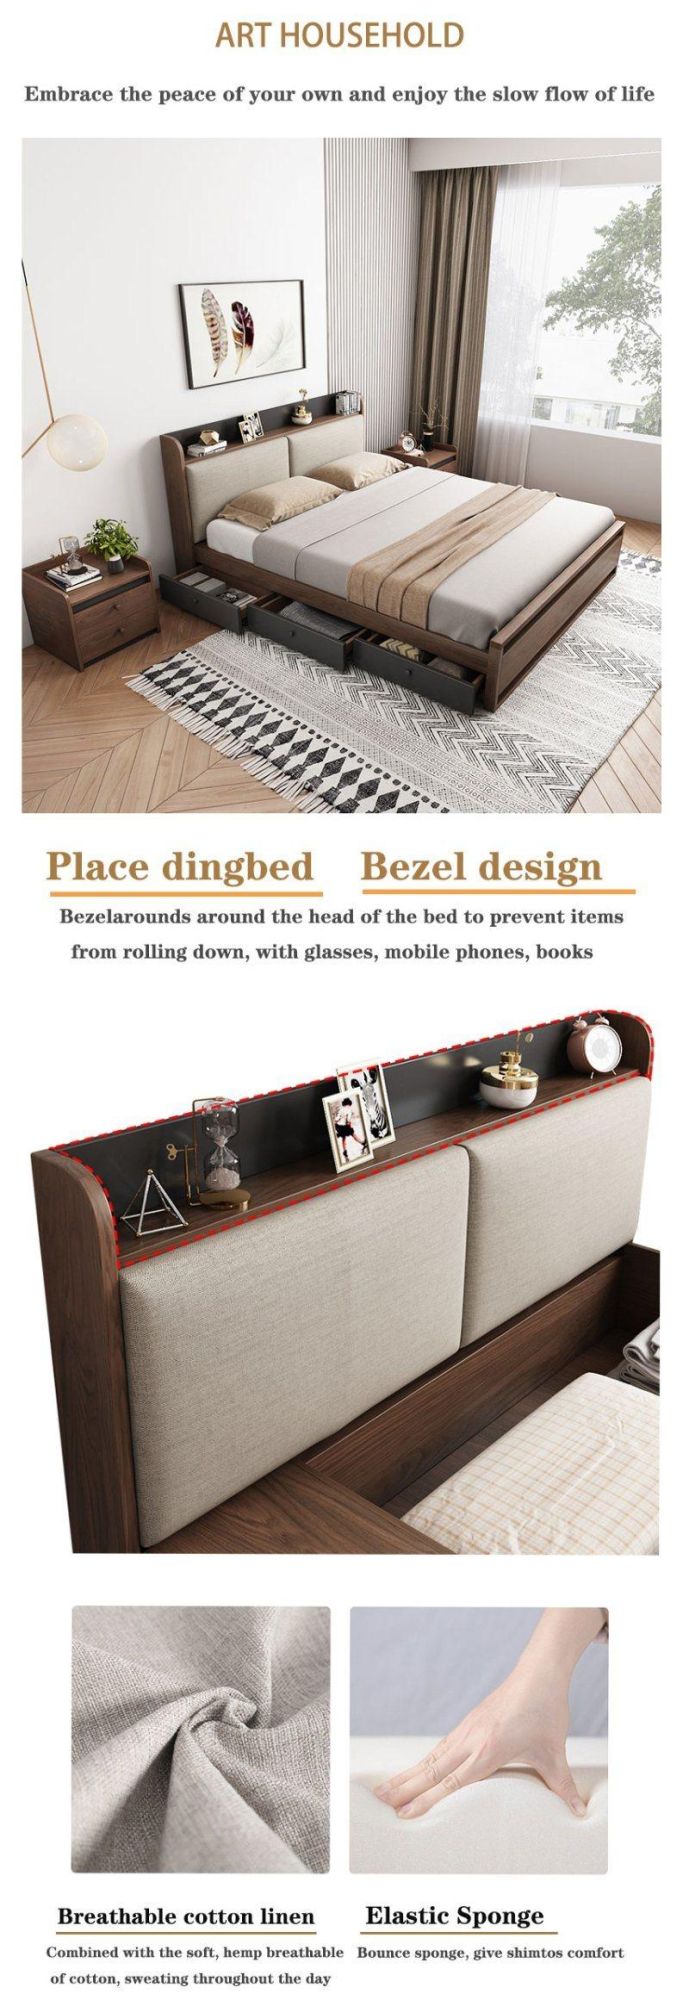 Wholesale Modern Design Hotel Home Bedroom Furniture Bed Wooden Melamine Bedroom Set Sofa King Double Size Wall Beds